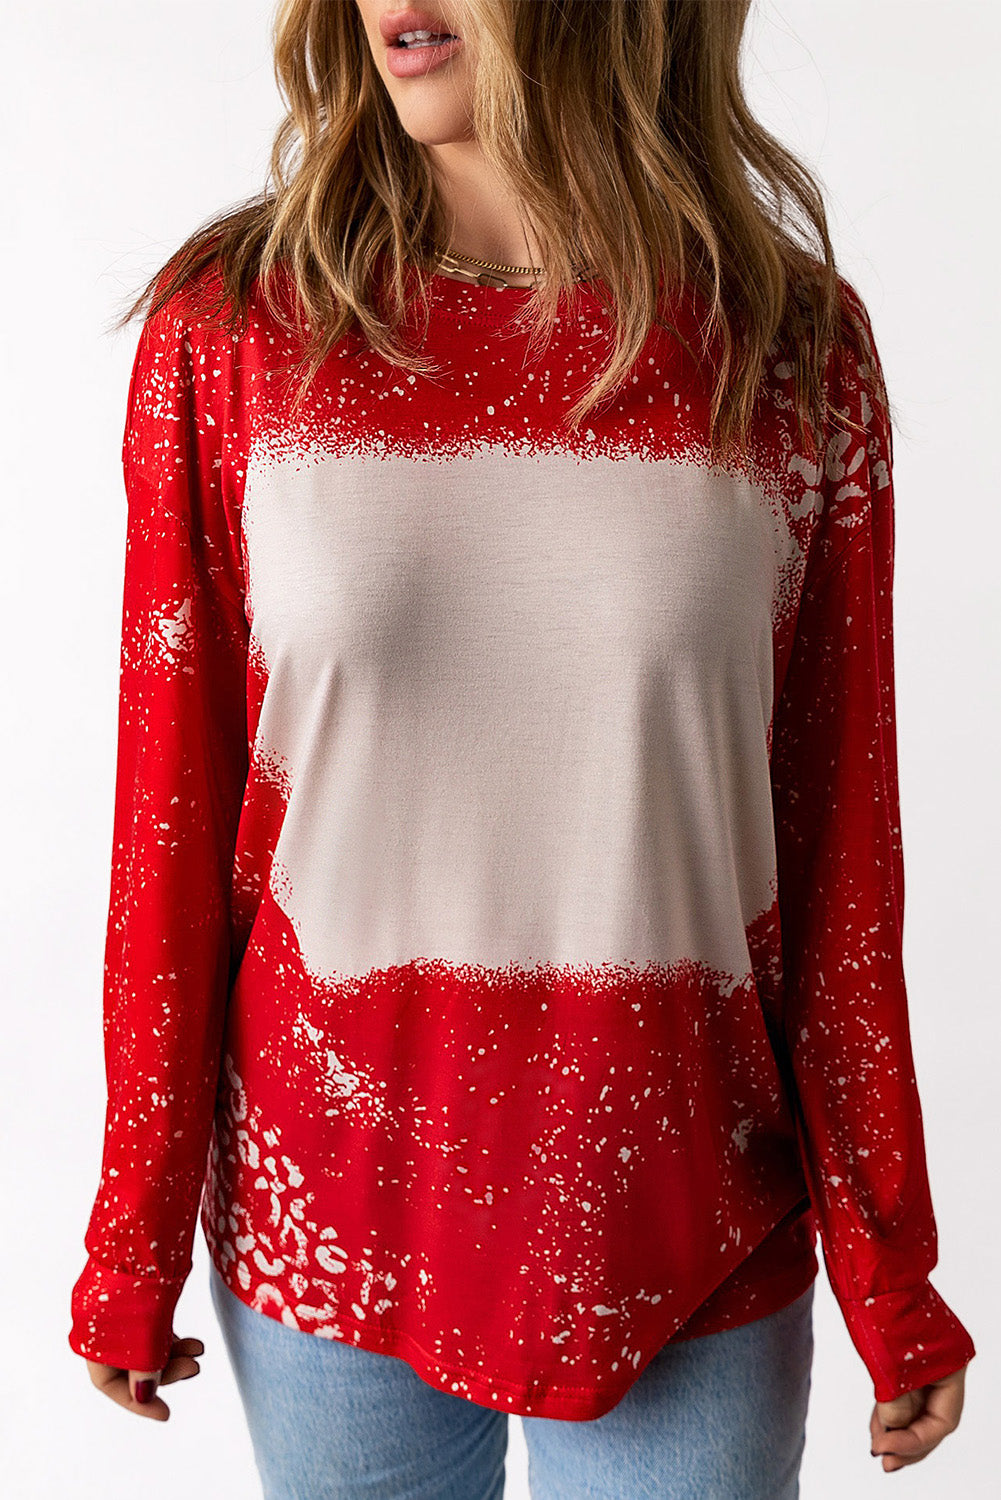 Ognjeno rdeč retro beljen pulover z leopardjimi pikami